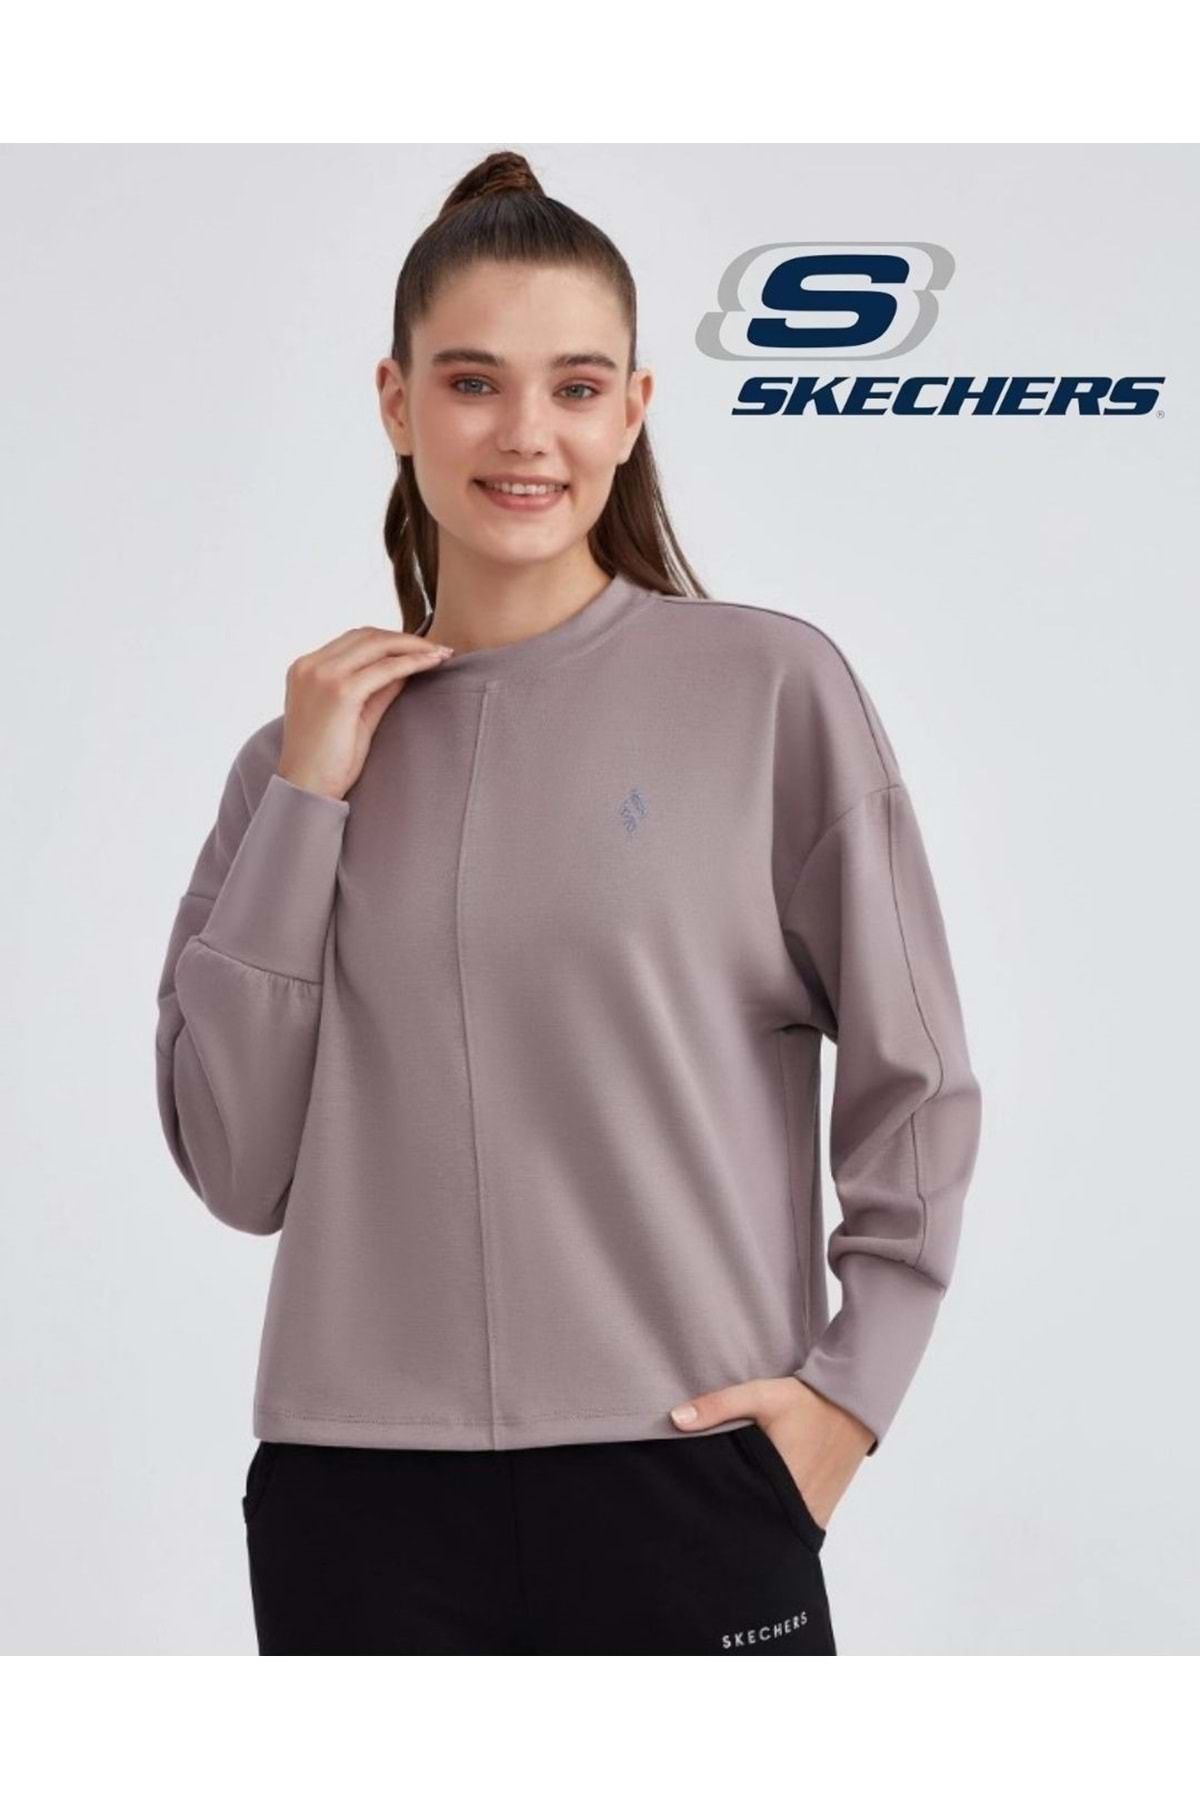 Skechers W Soft Touch Eco Crew Neck Sweatshirt Kadın Pembe Sweatshirt S232181-506